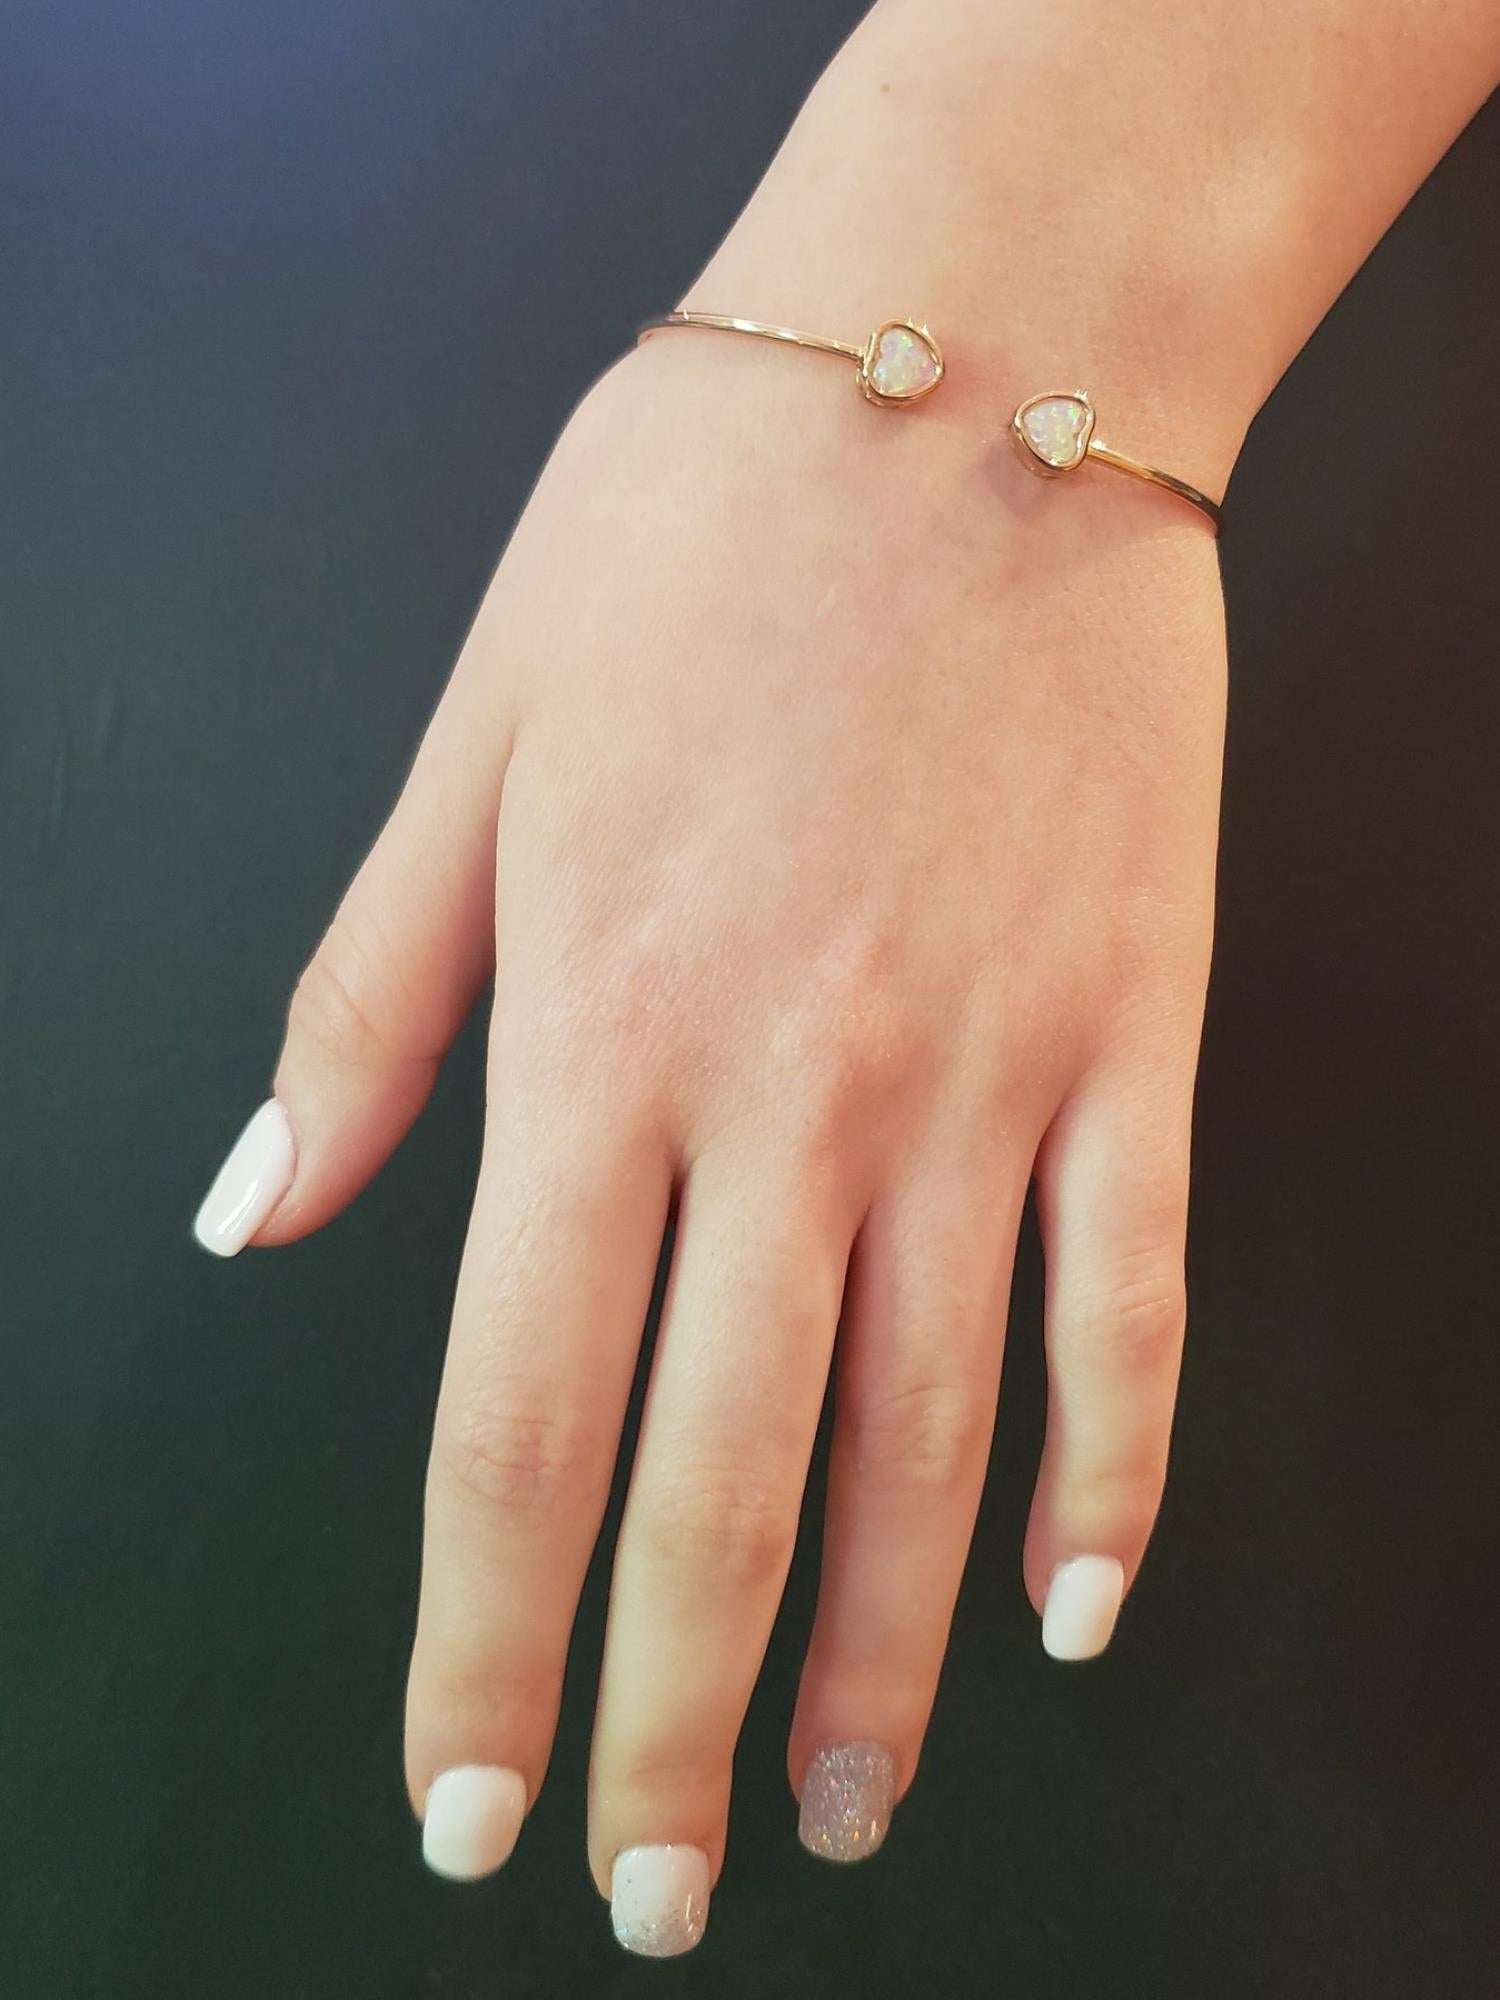 14Kt Gold Pink Opal Heart Bezel Bangle Bracelet